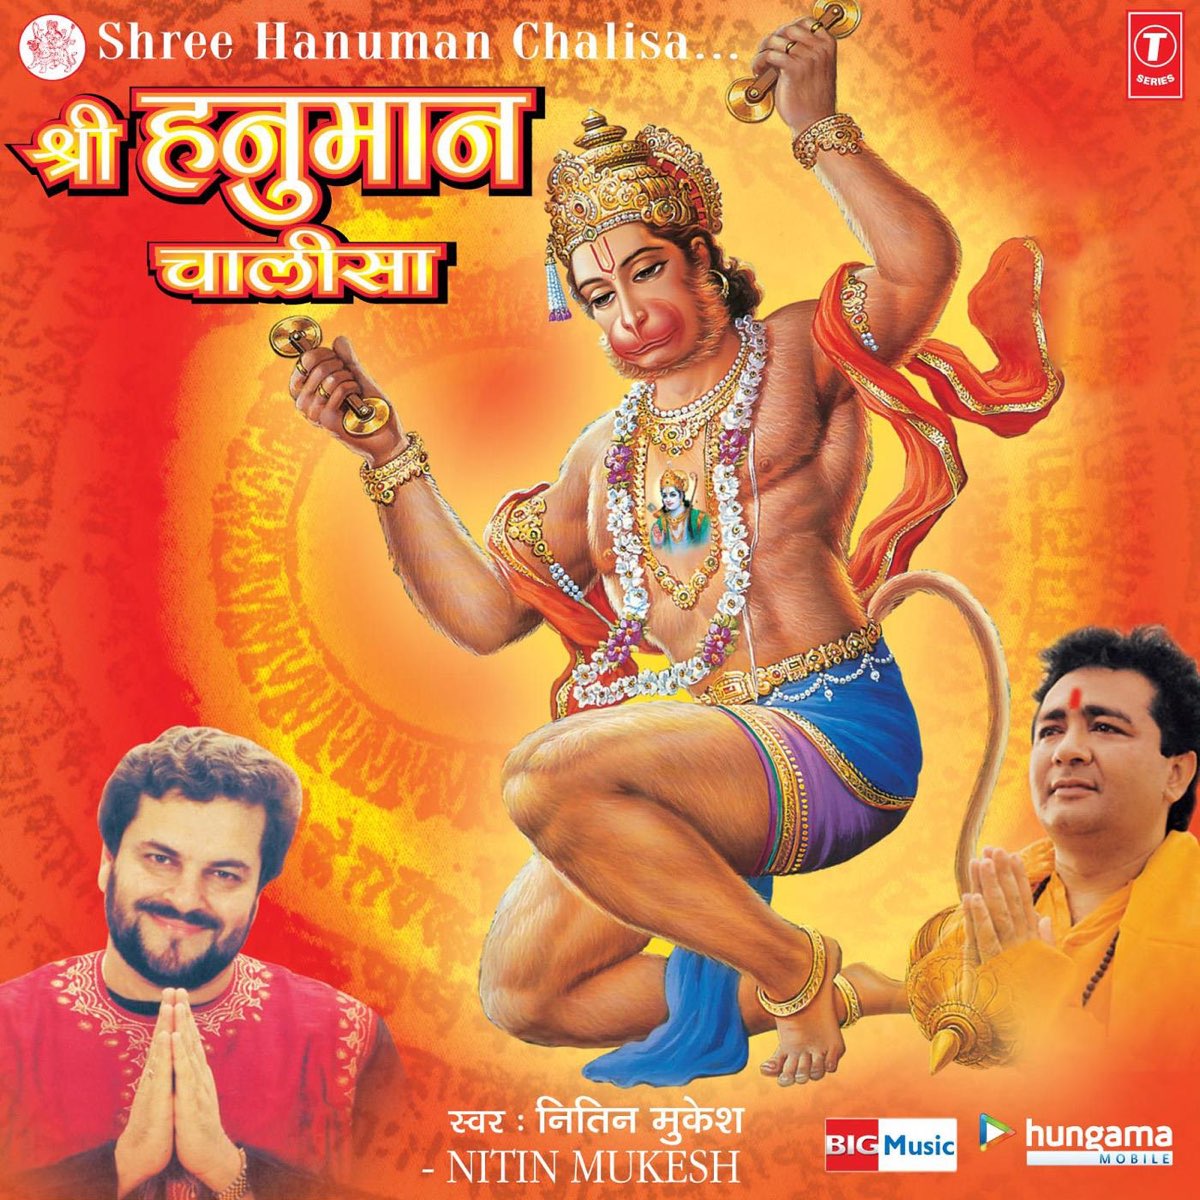 Shree Hanuman Chalisa - Album by Nitin Mukesh - Apple Music